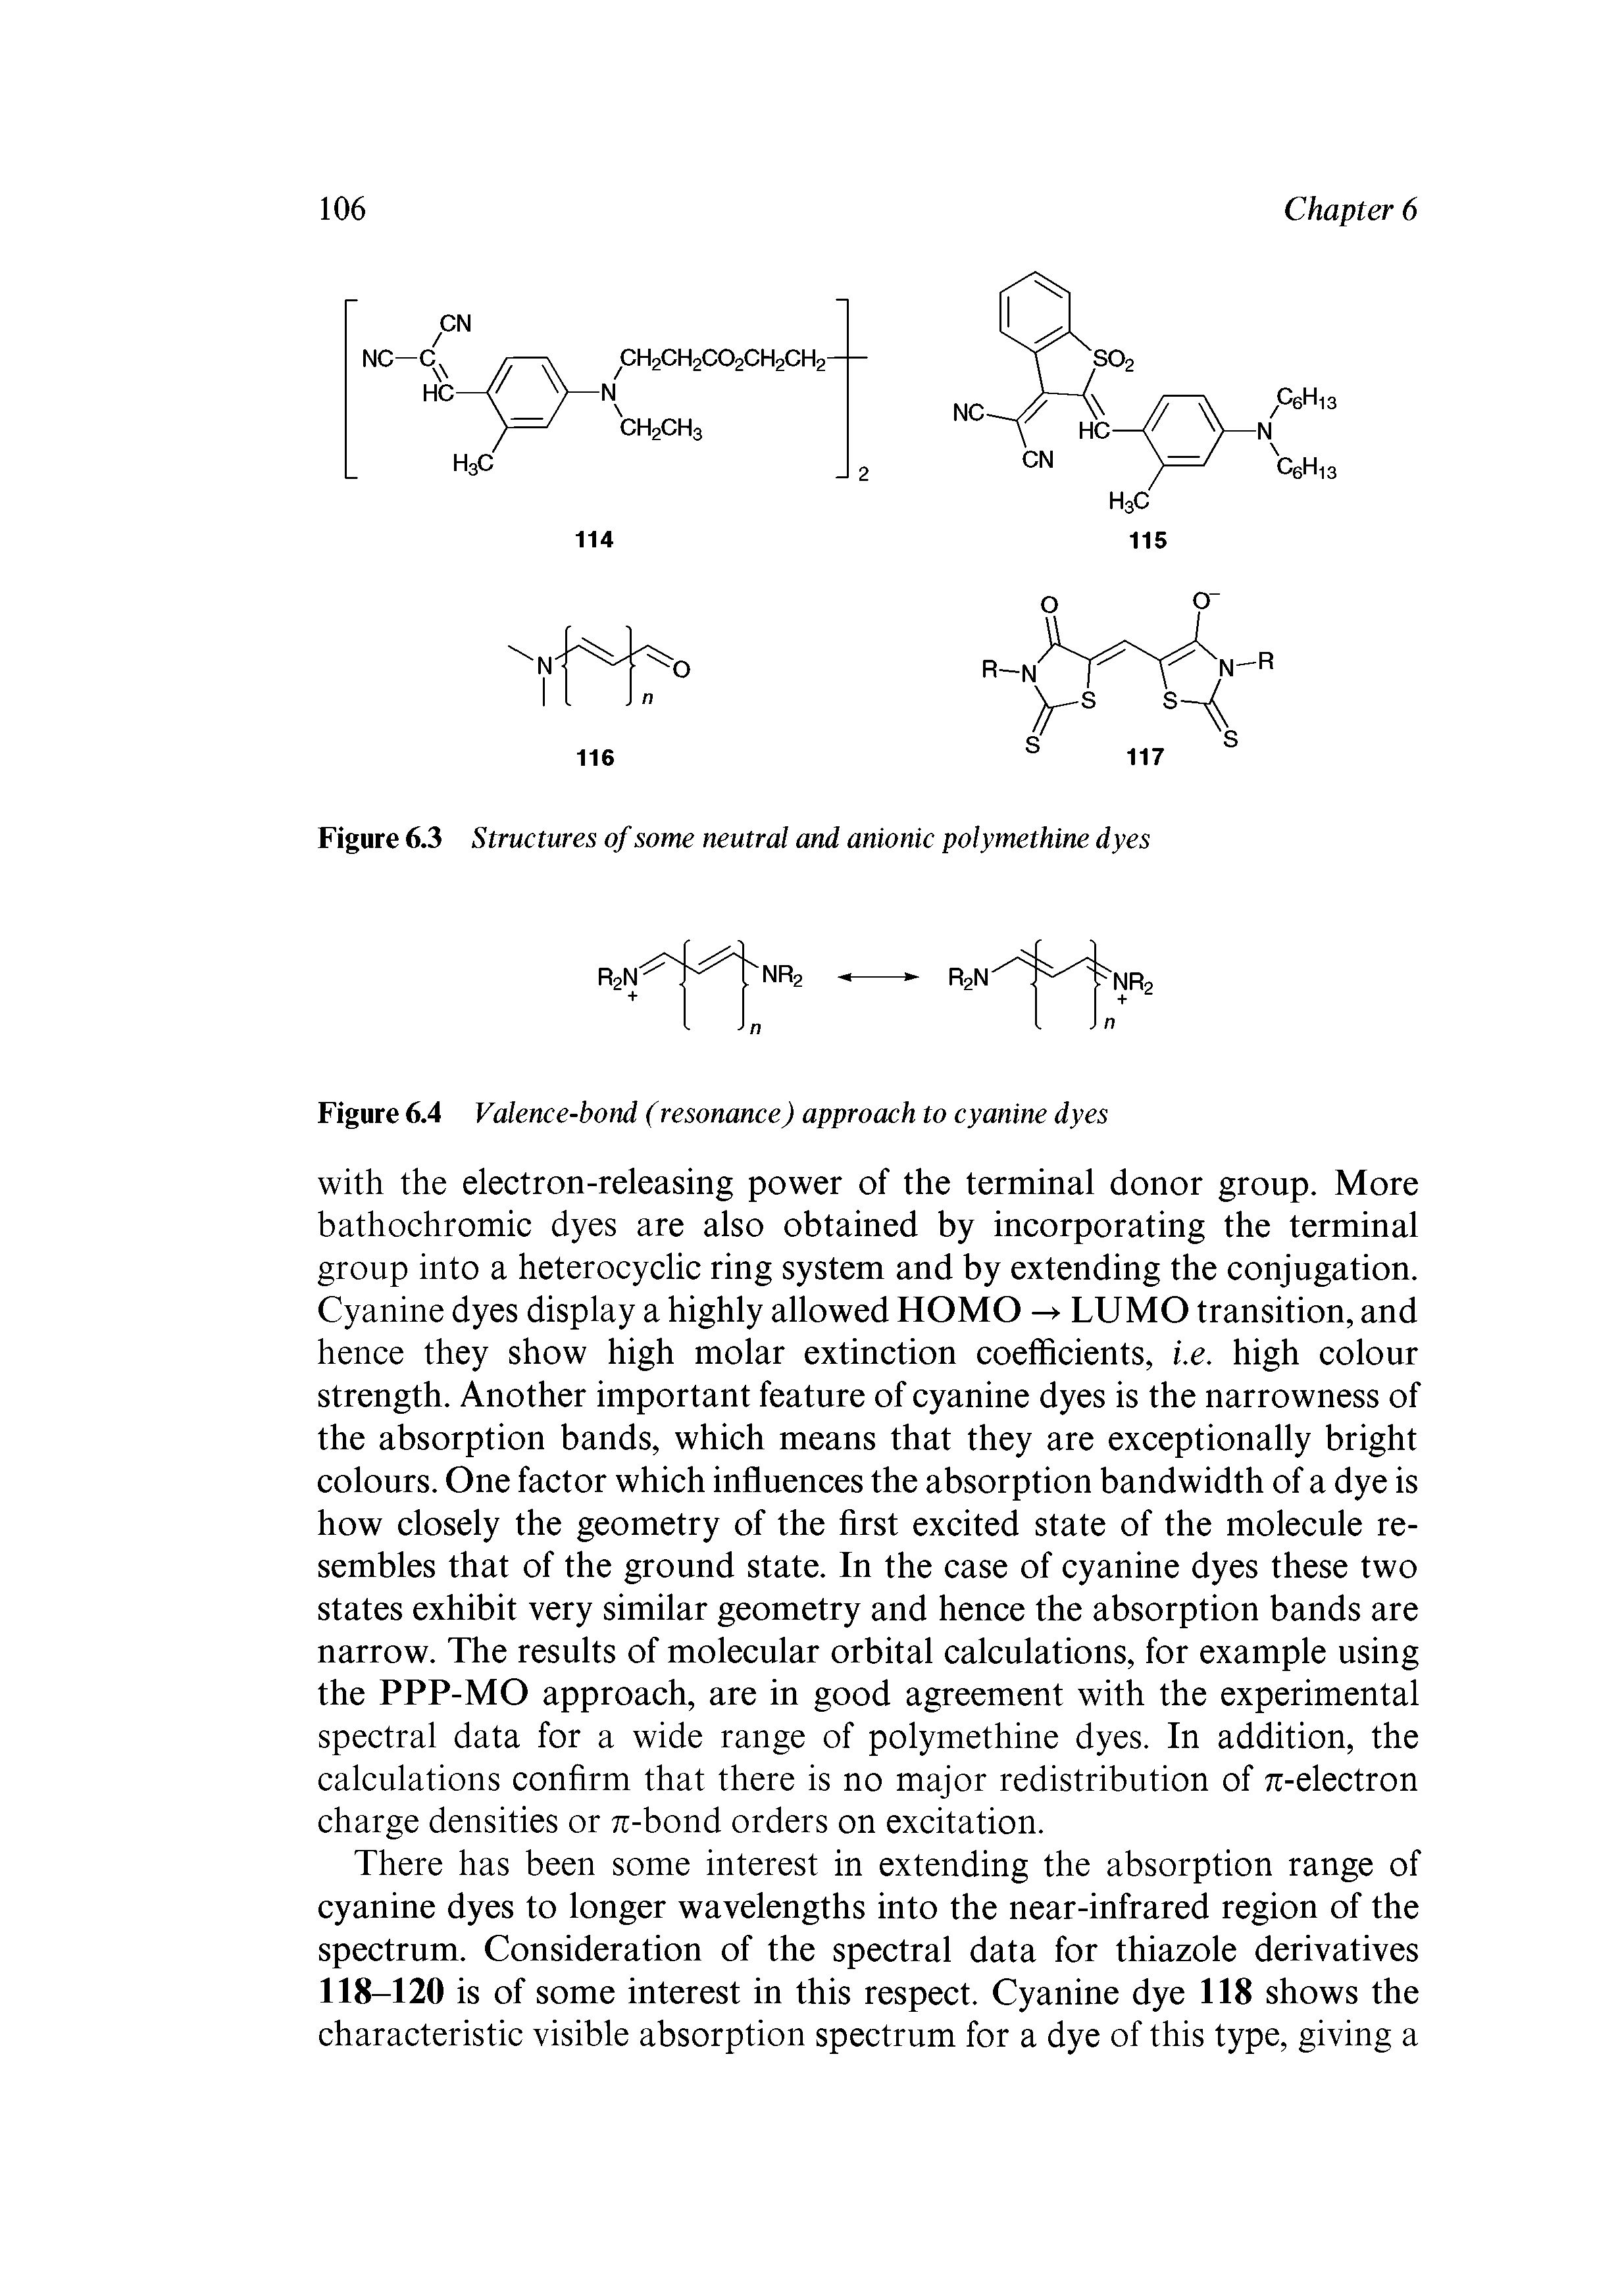 Figure 6.4 Valence-bond (resonance) approach to cyanine dyes...